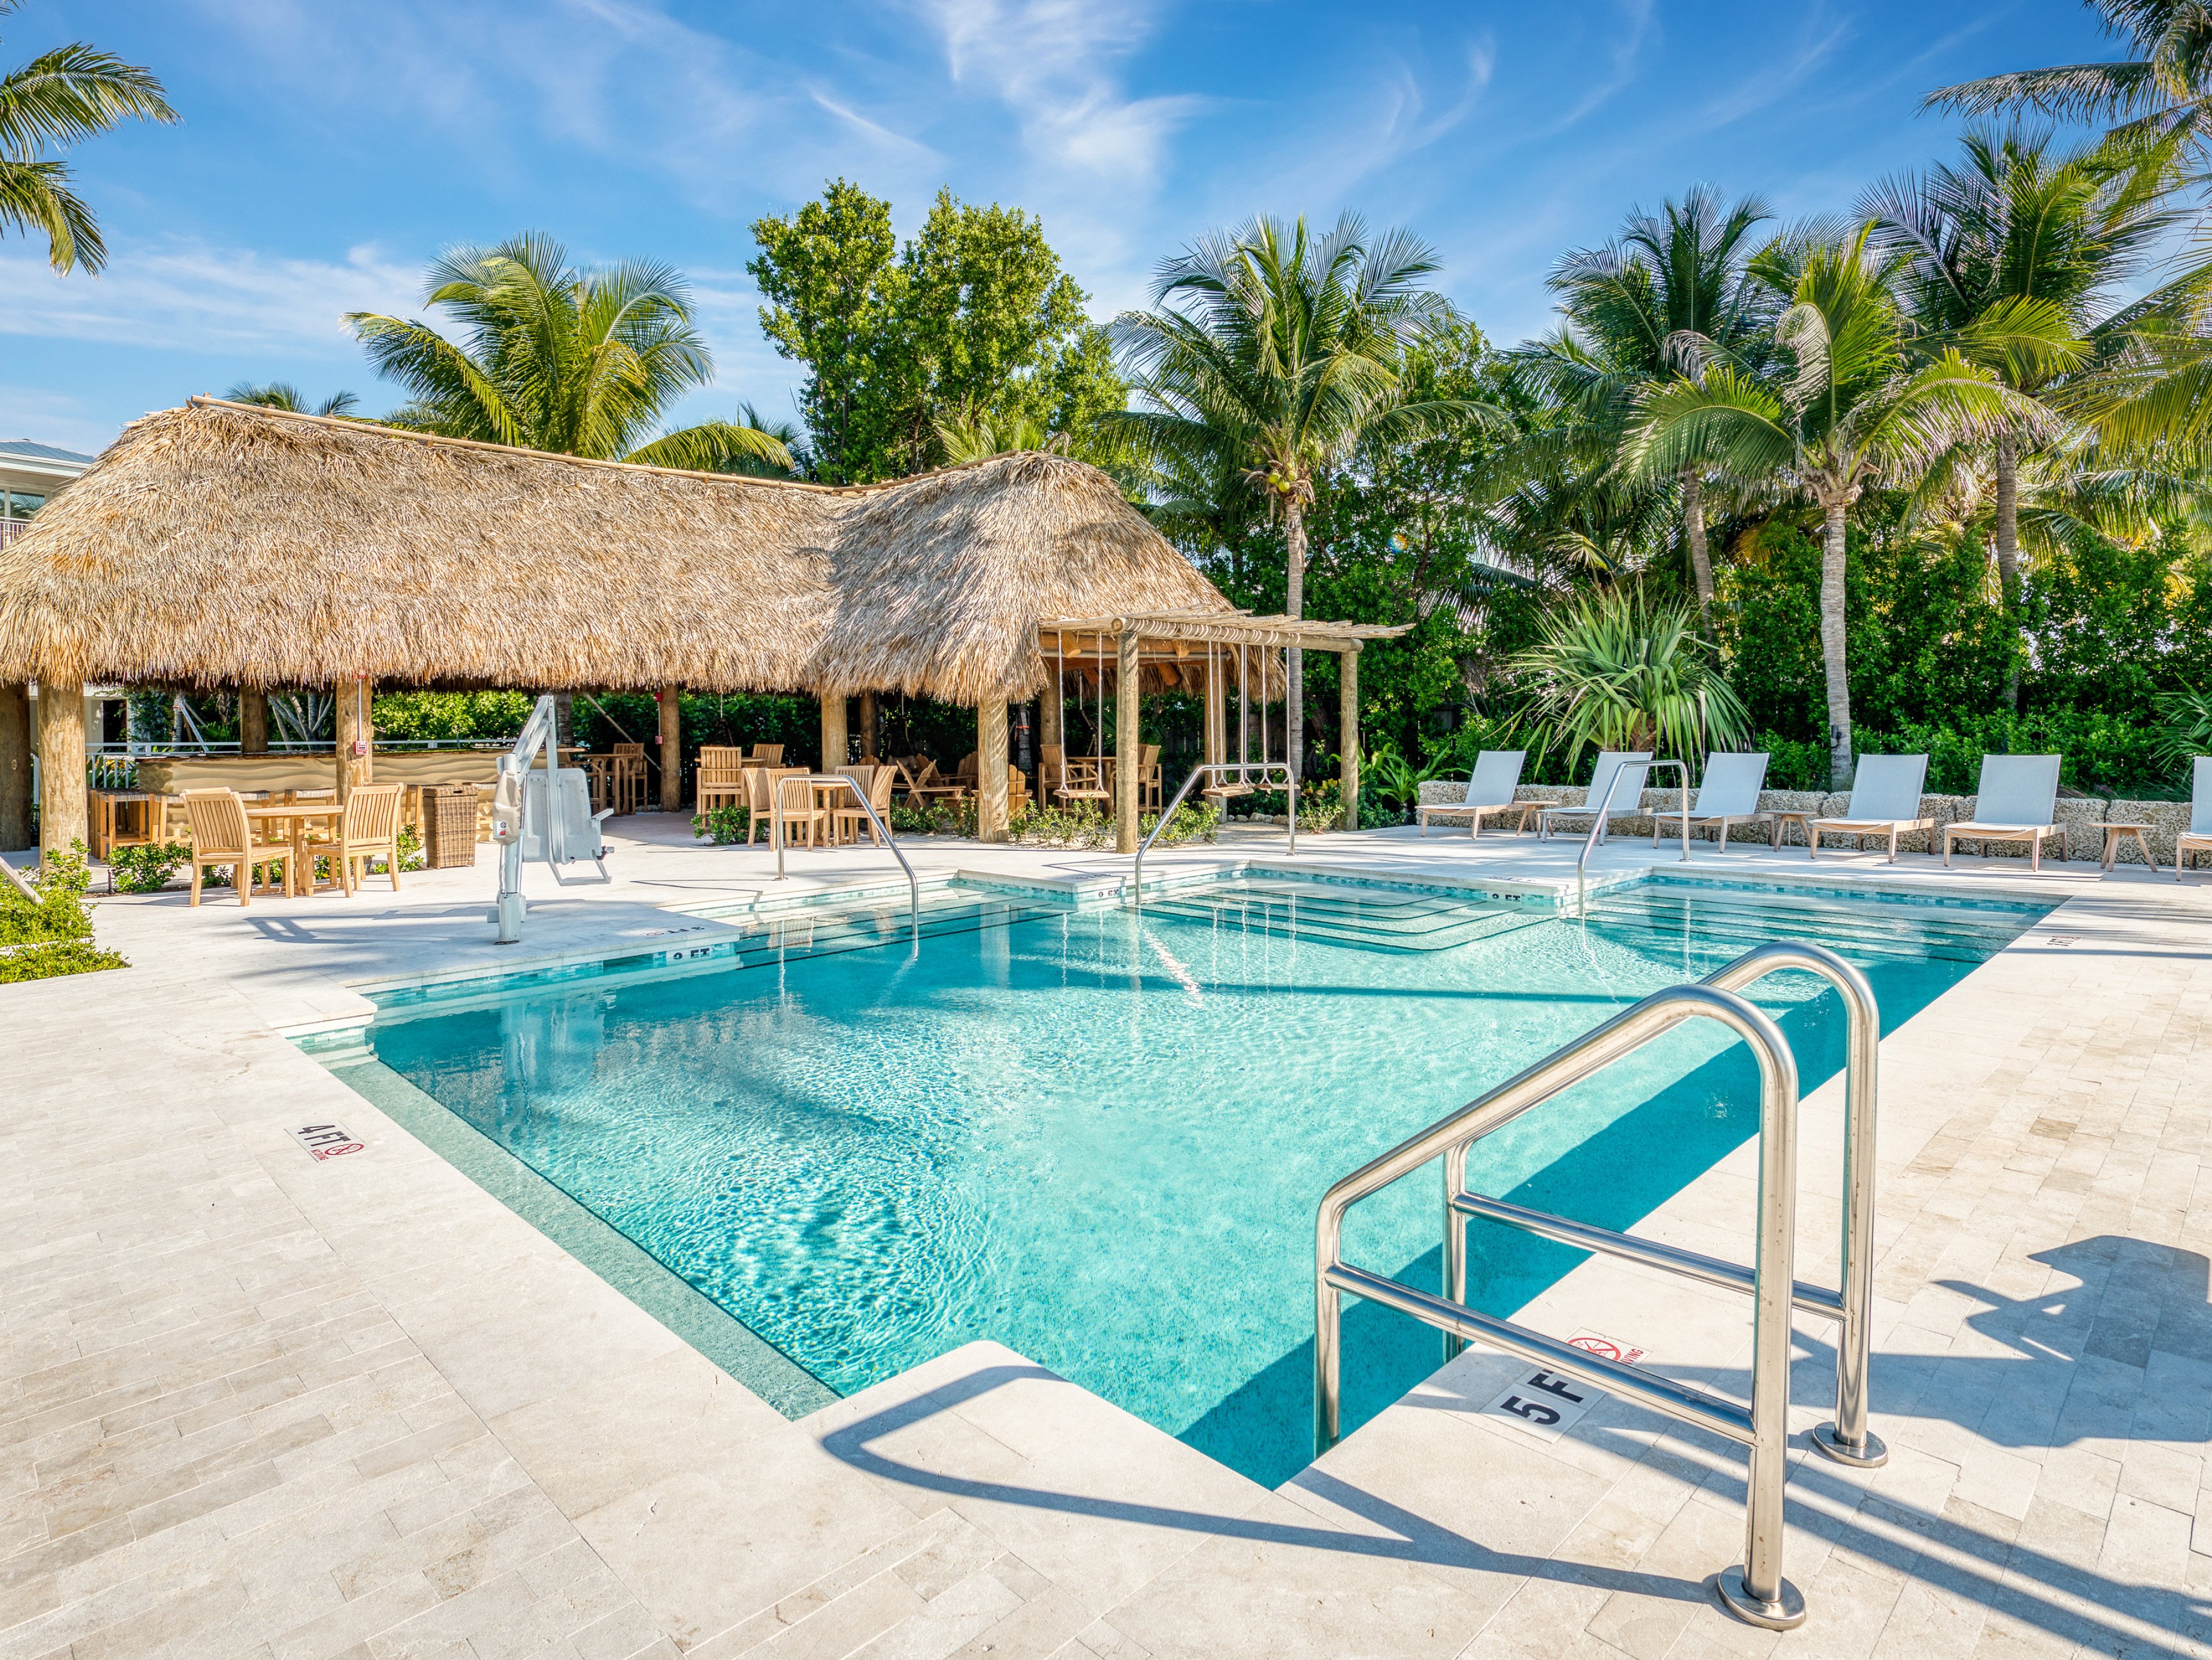 Islamorada Premium Villa 2 - Bunk Beds - Islamorada vacation rentals with pool access